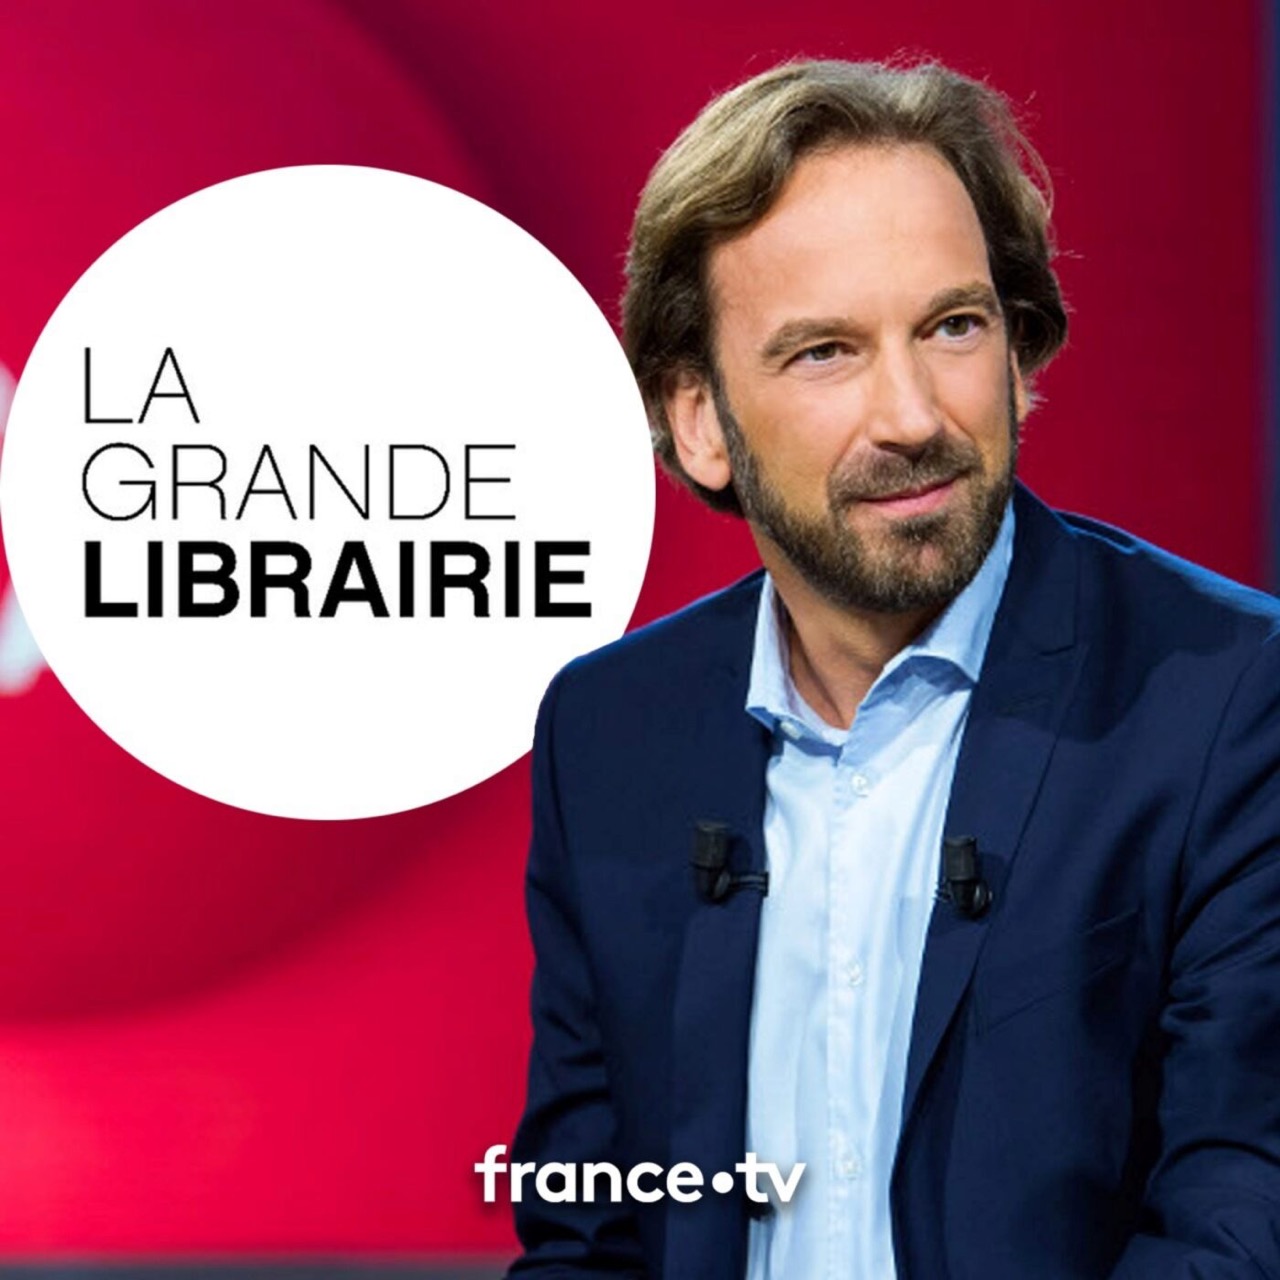 La grande librairie Podcasts Français